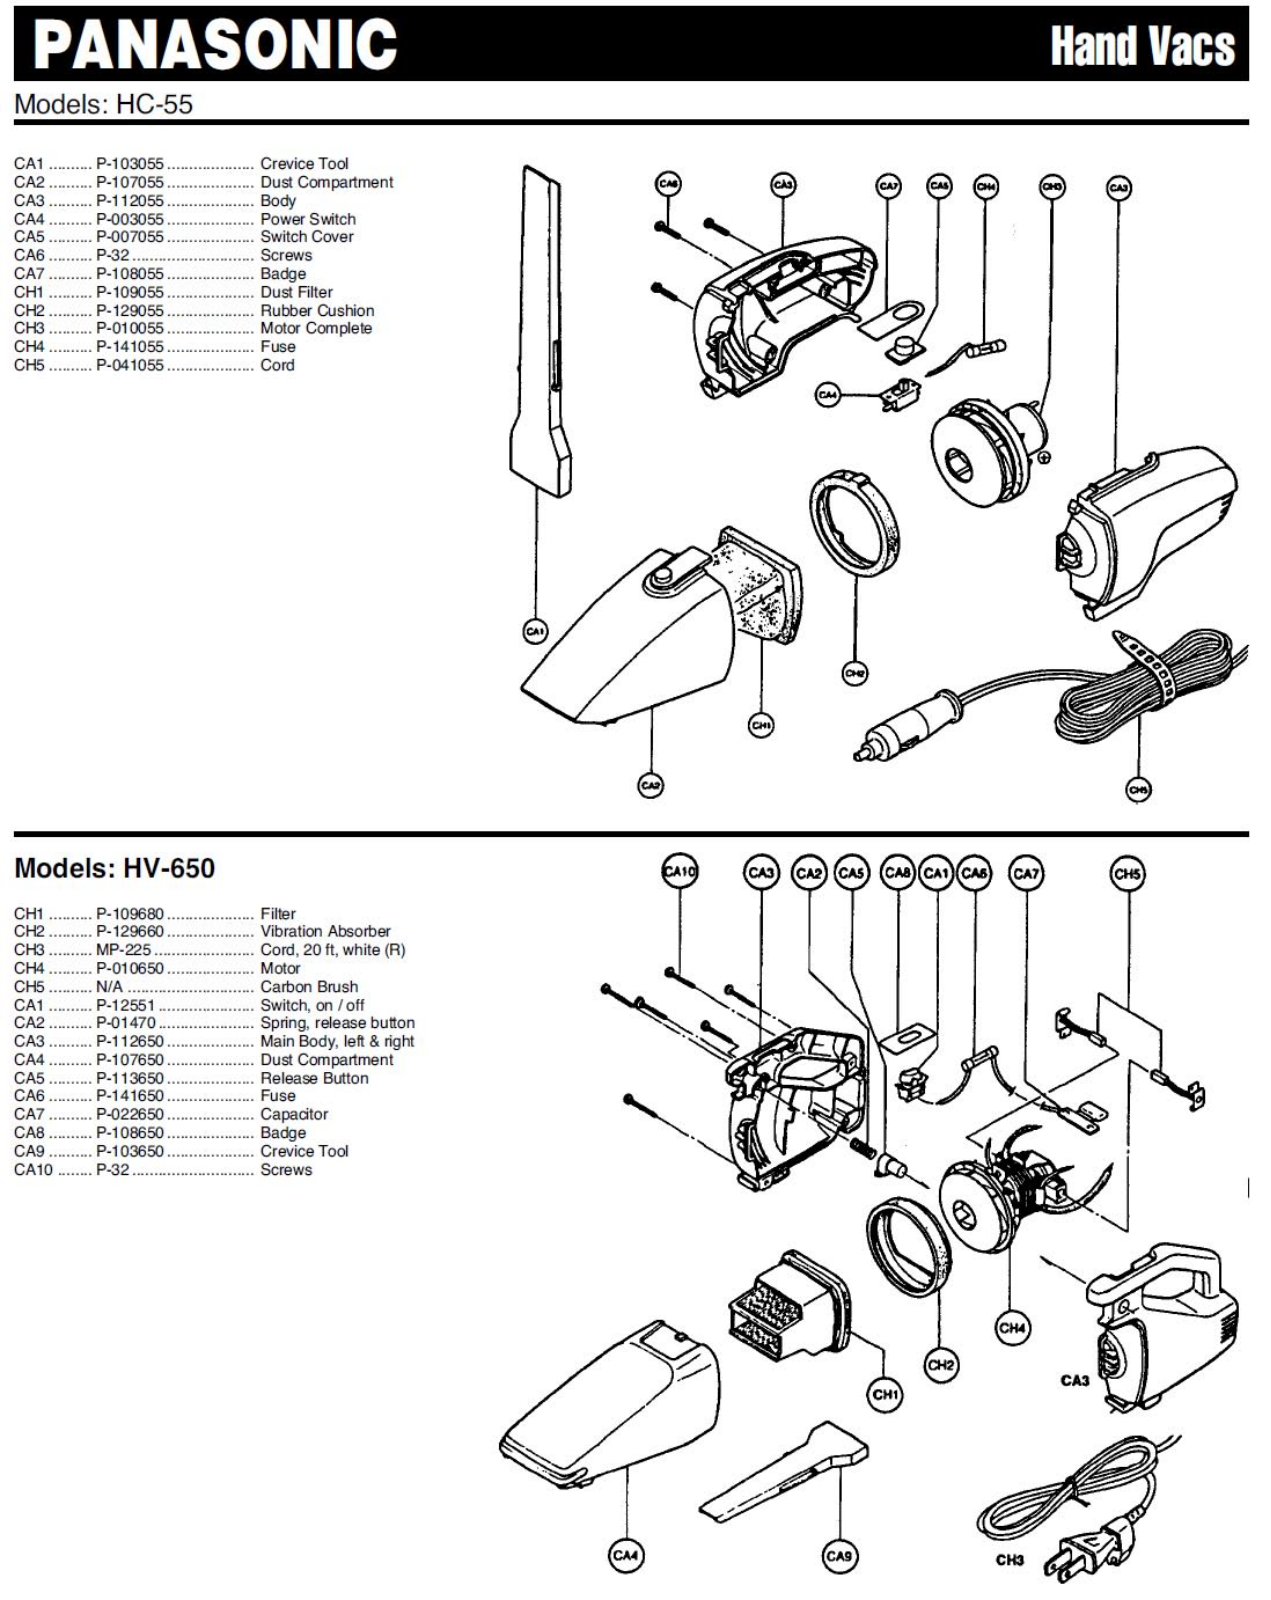 Panasonic Hc-55 Parts List